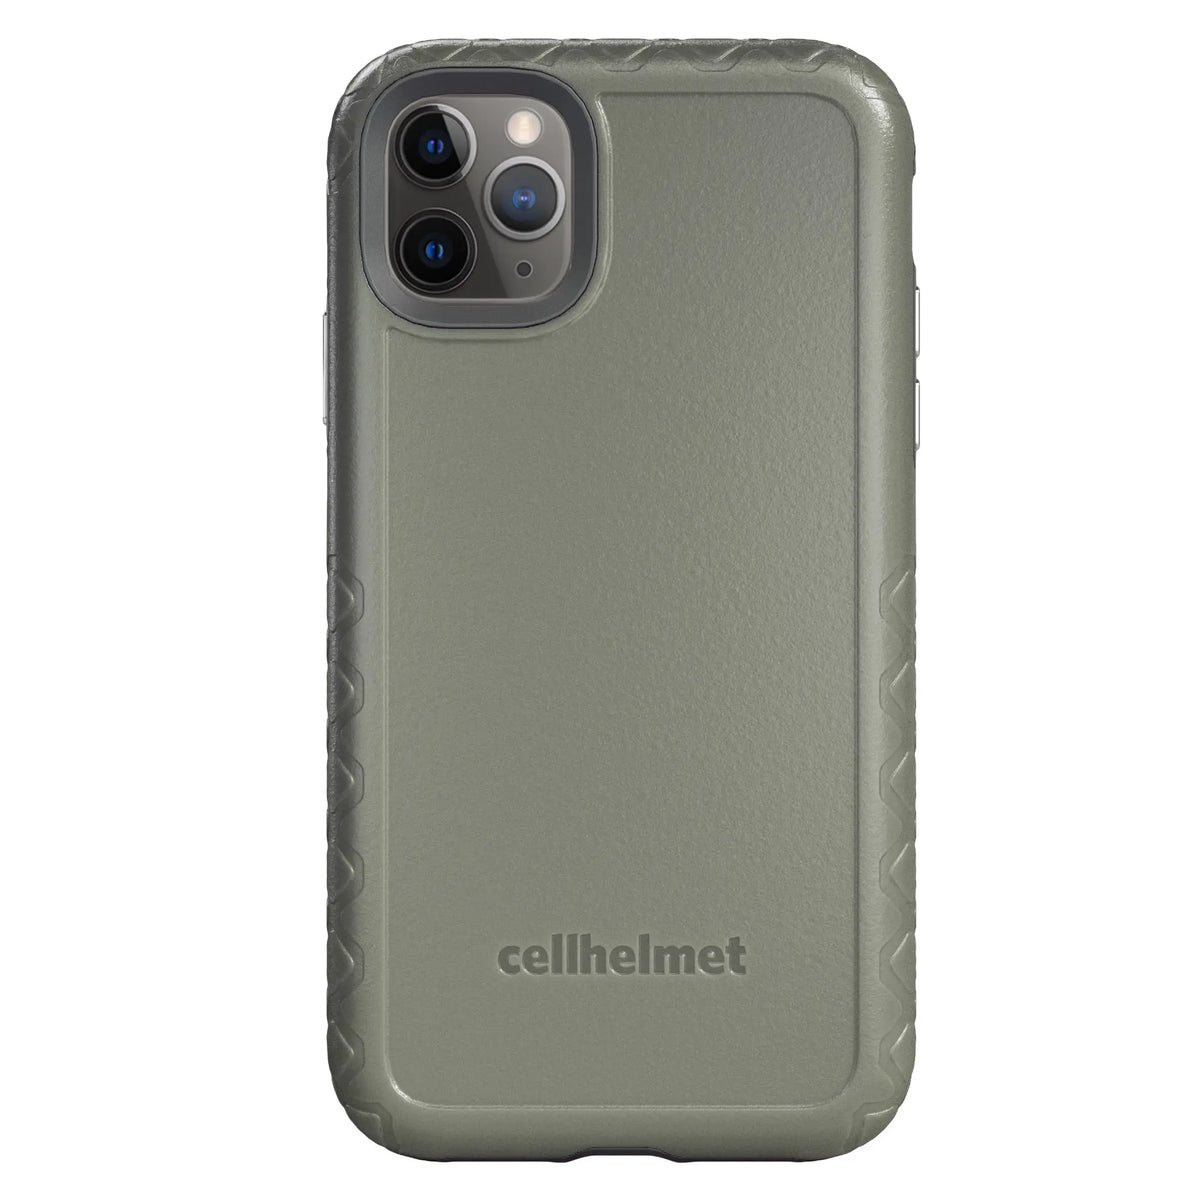 Green cellhelmet Customizable Case for iPhone 11 Pro Max